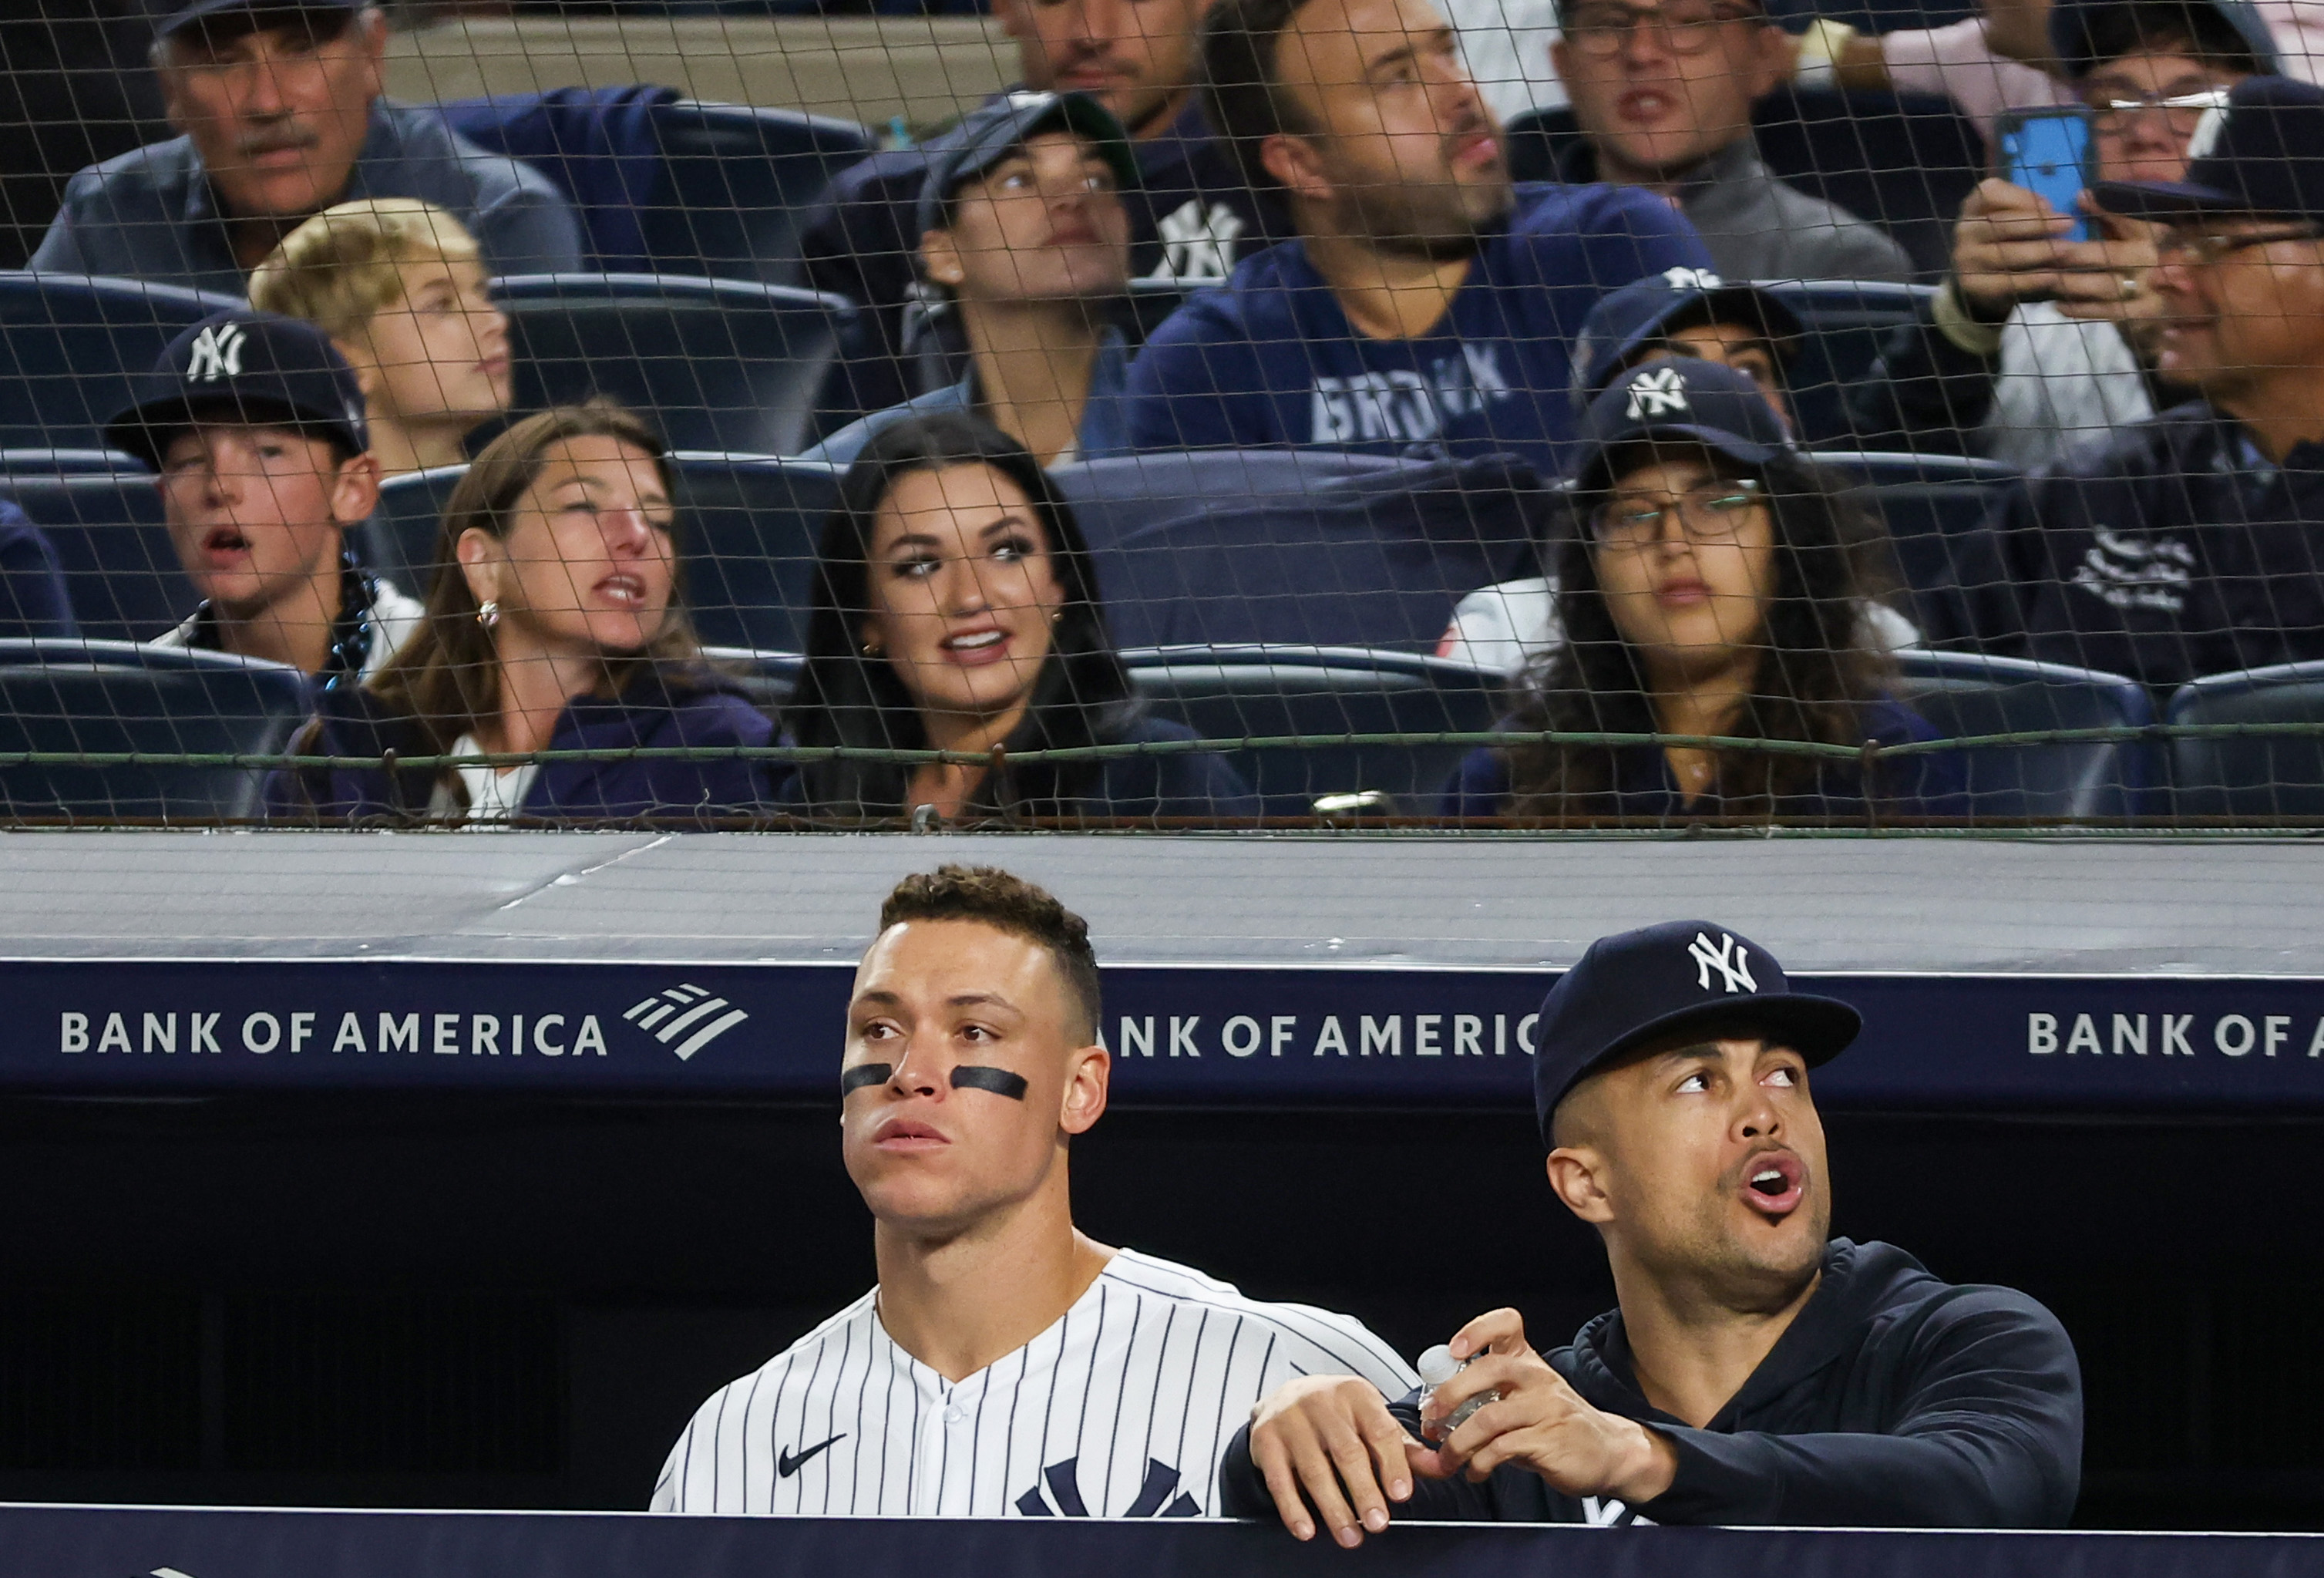 Aaron Judge steamrolls into uncertain offseason as Yankees lose in